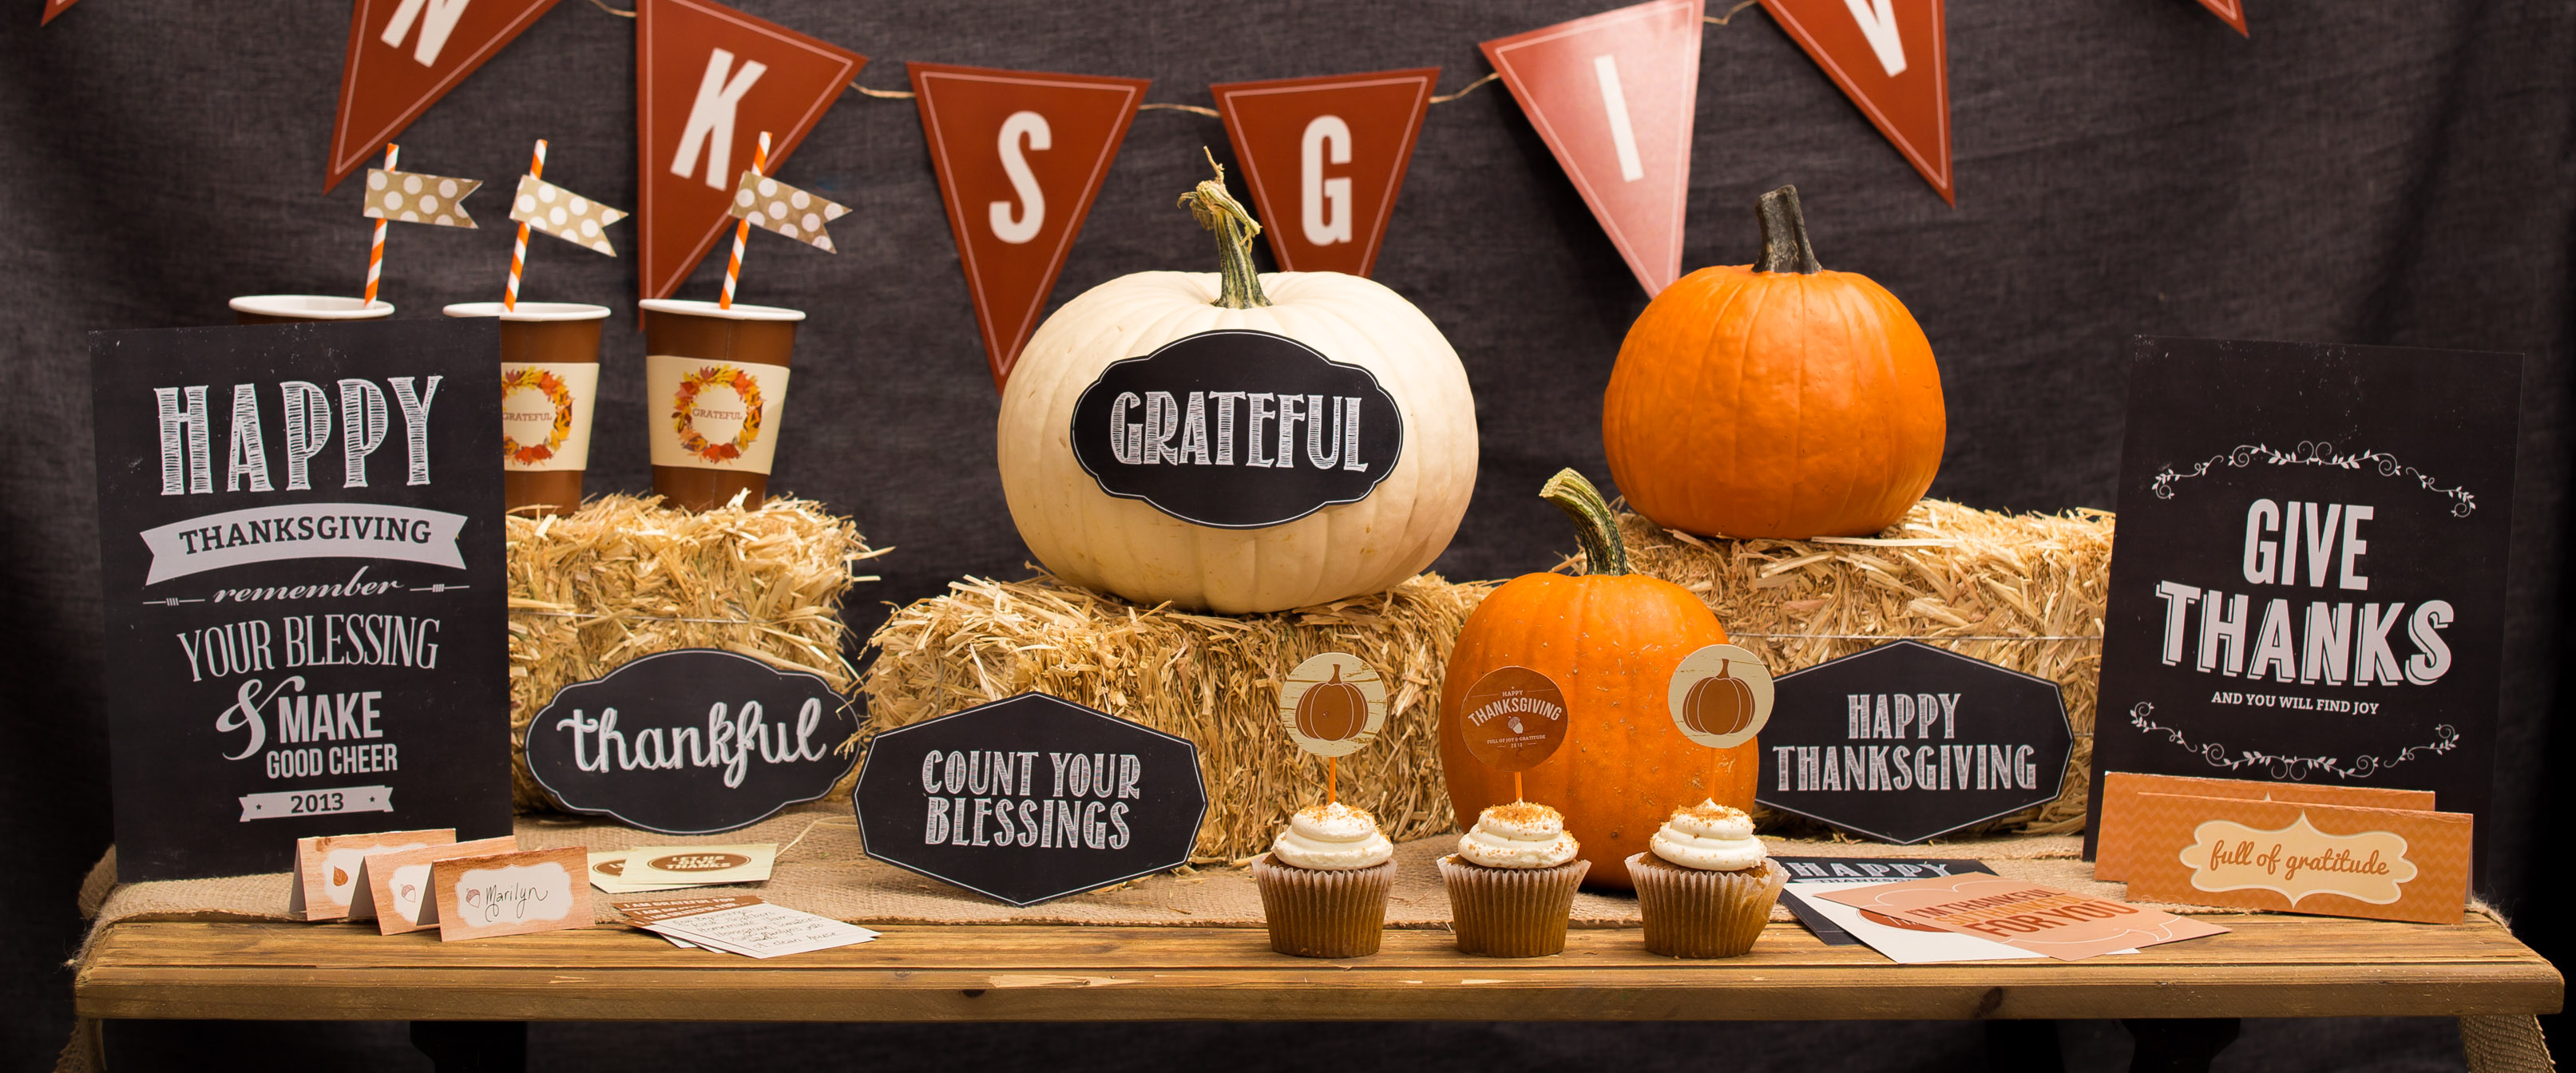 thanksgiving, holiday, message, pumpkin Full HD